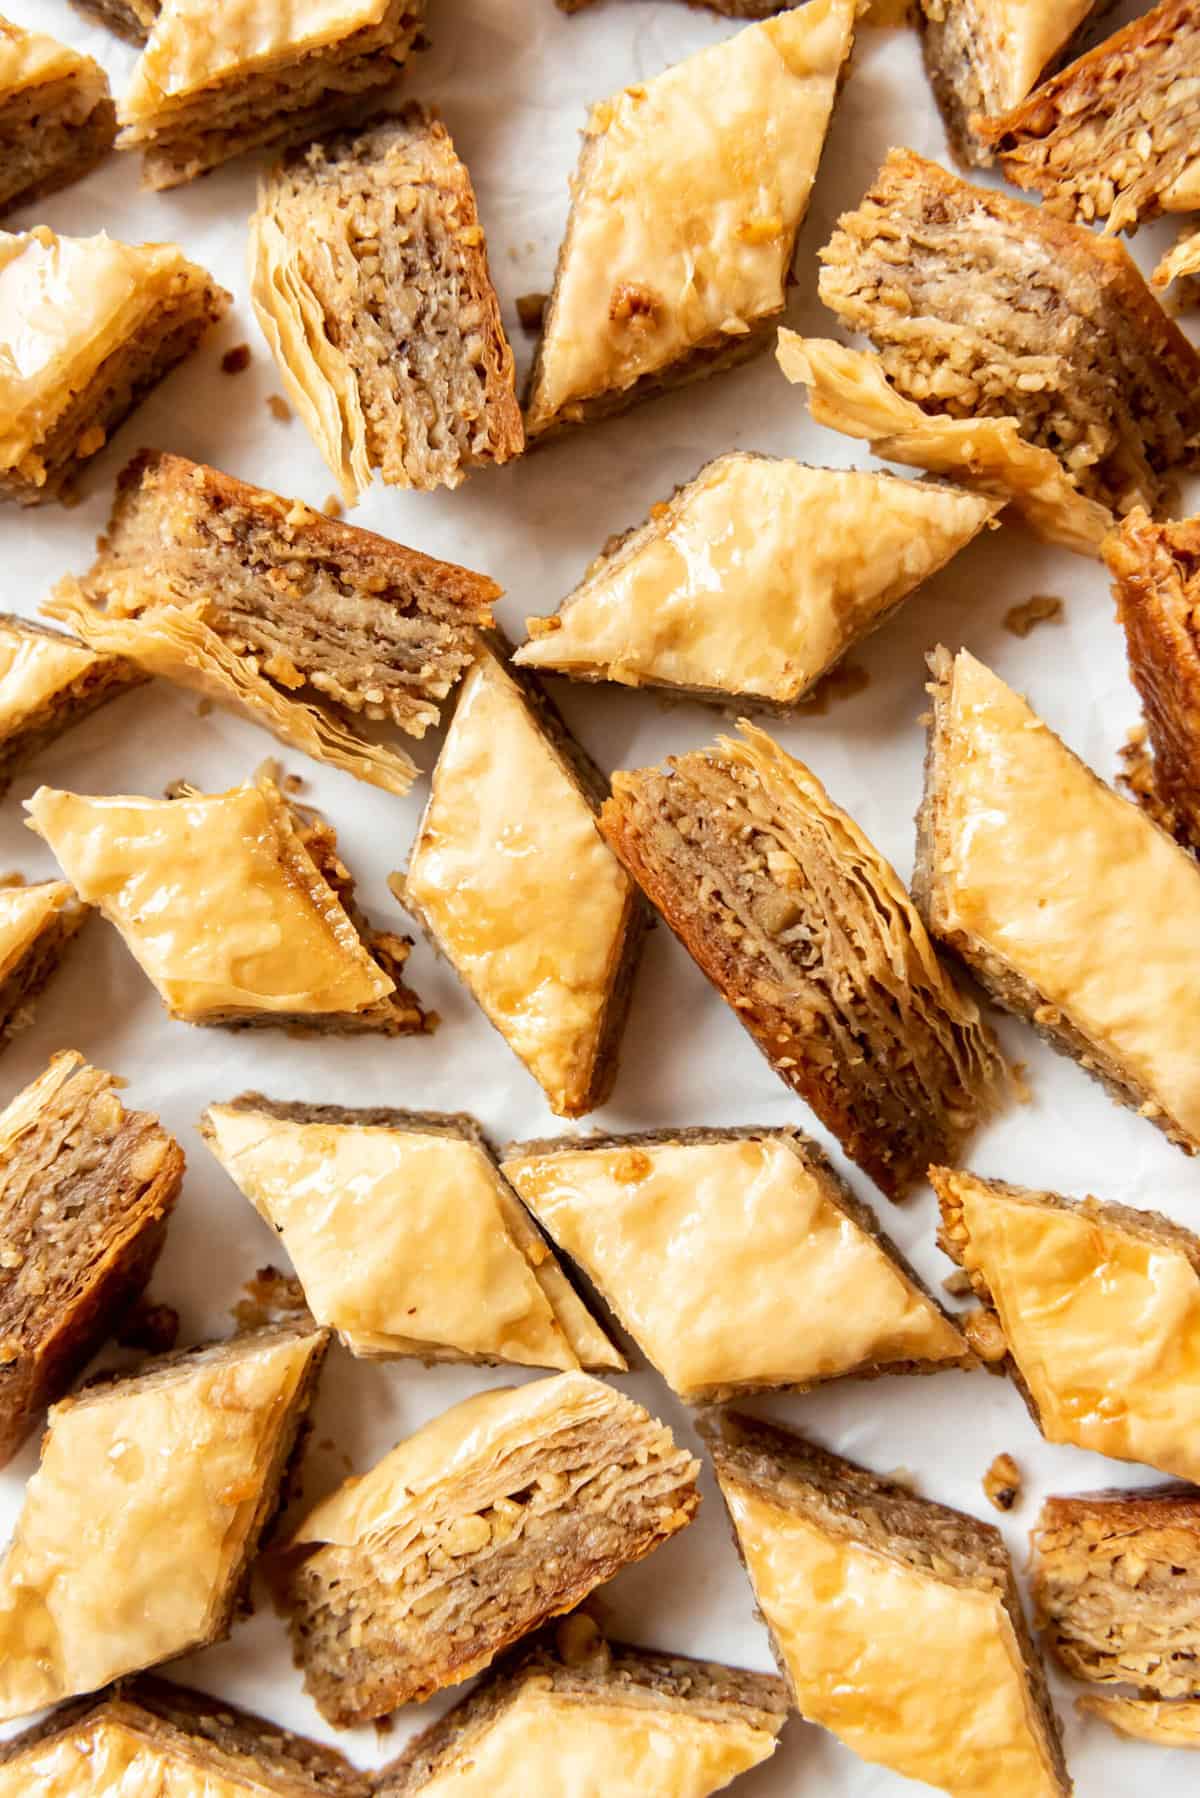 Diamond-shaped pieces of homemade baklava with honey and walnuts.